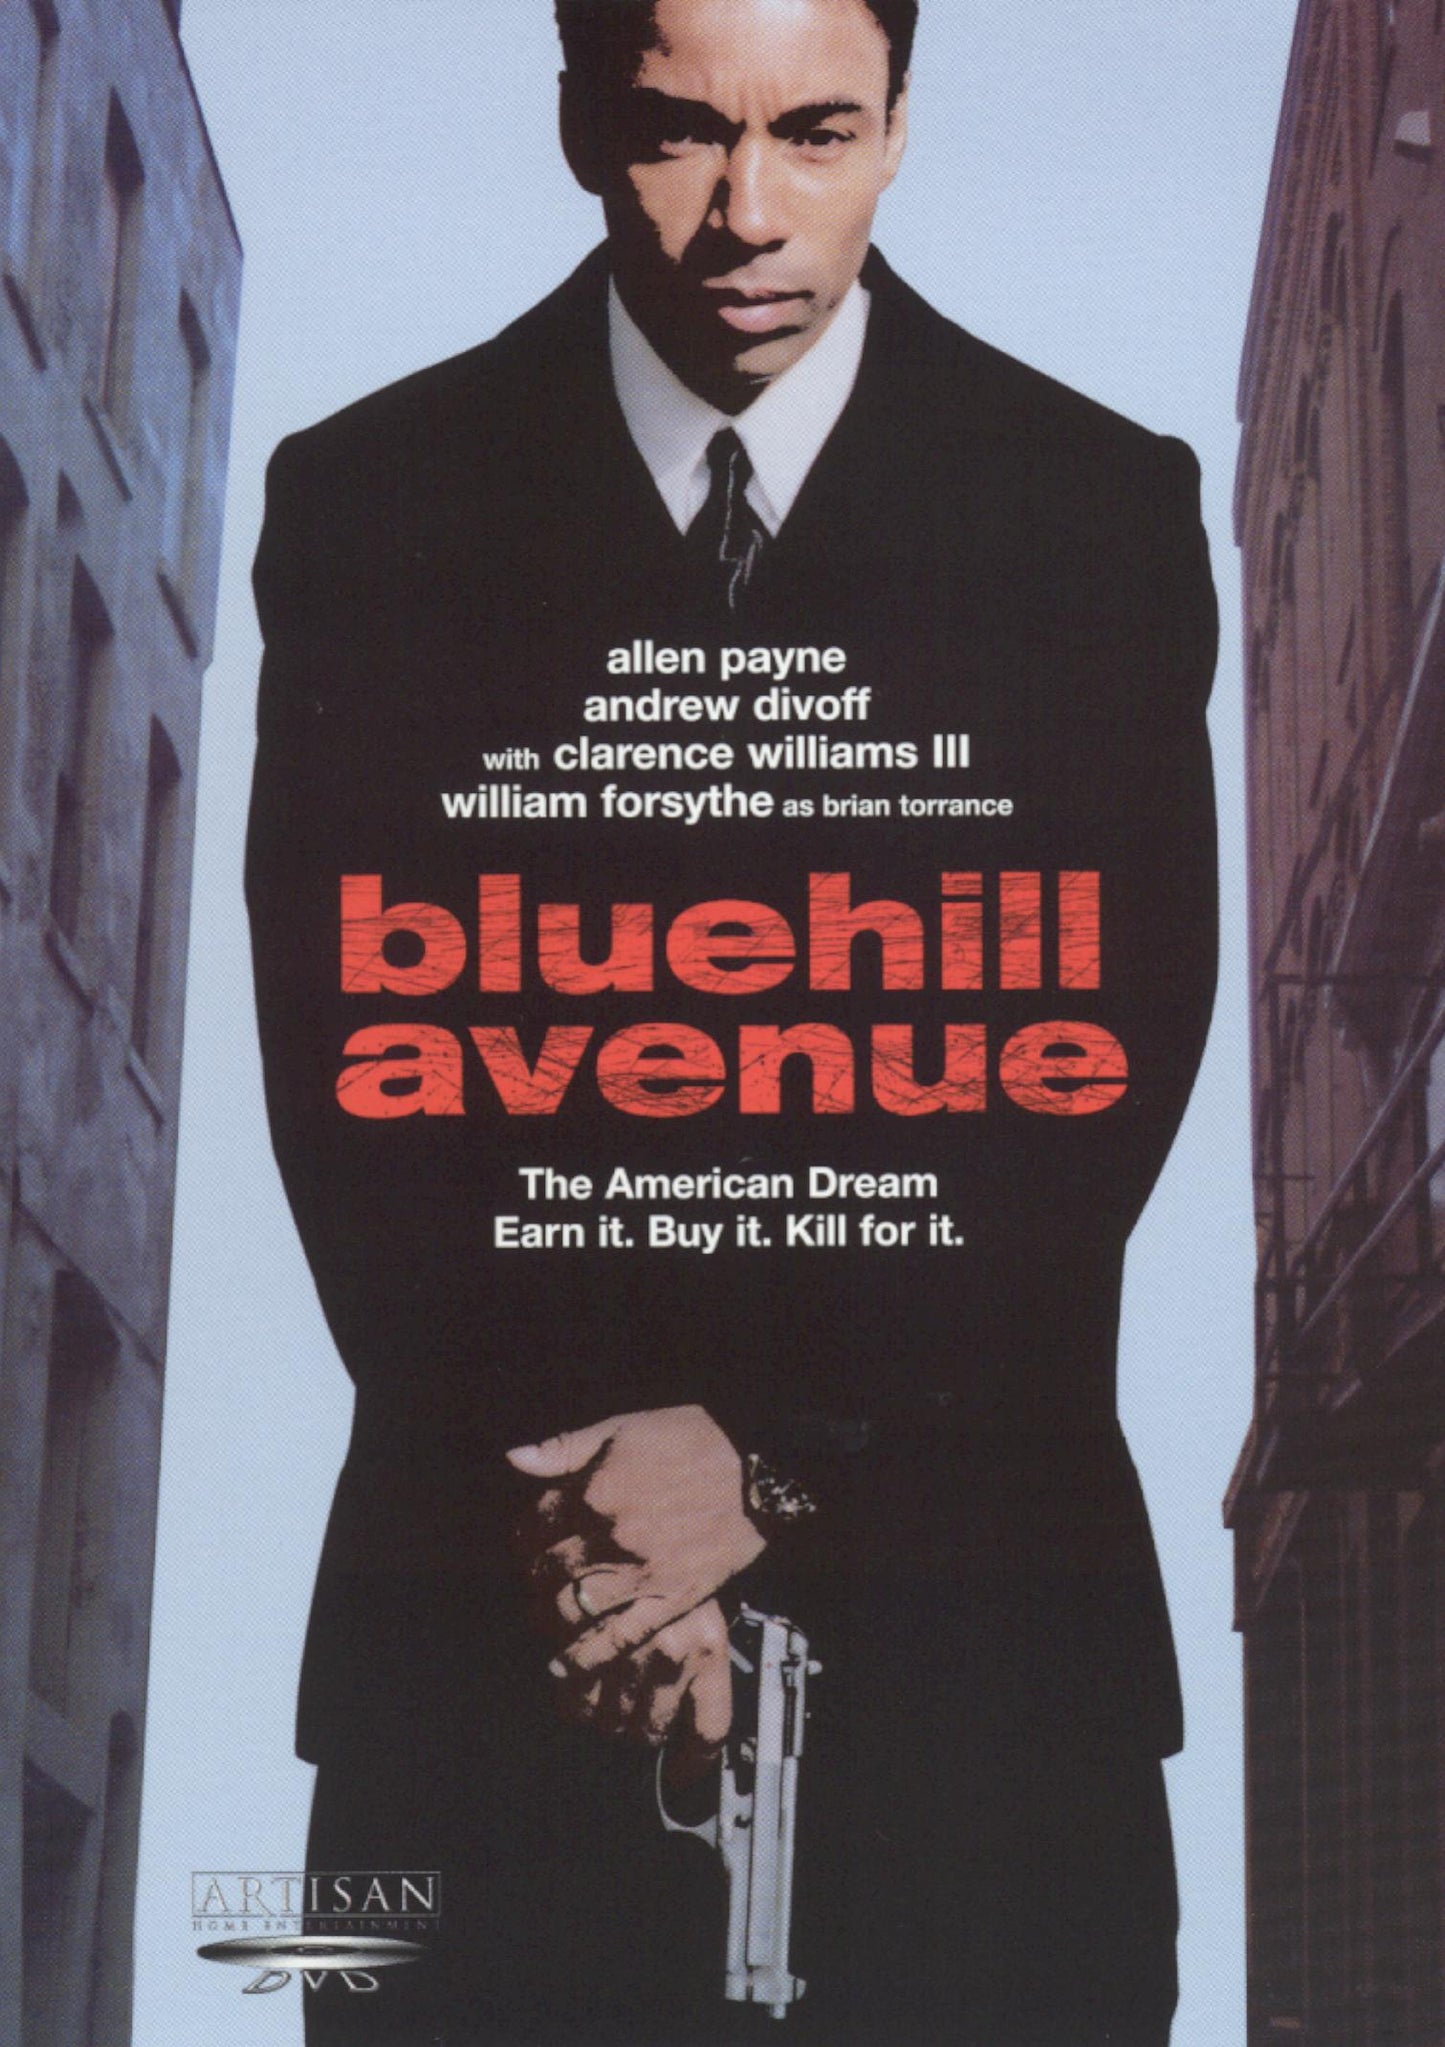 Bluehill Avenue cover art